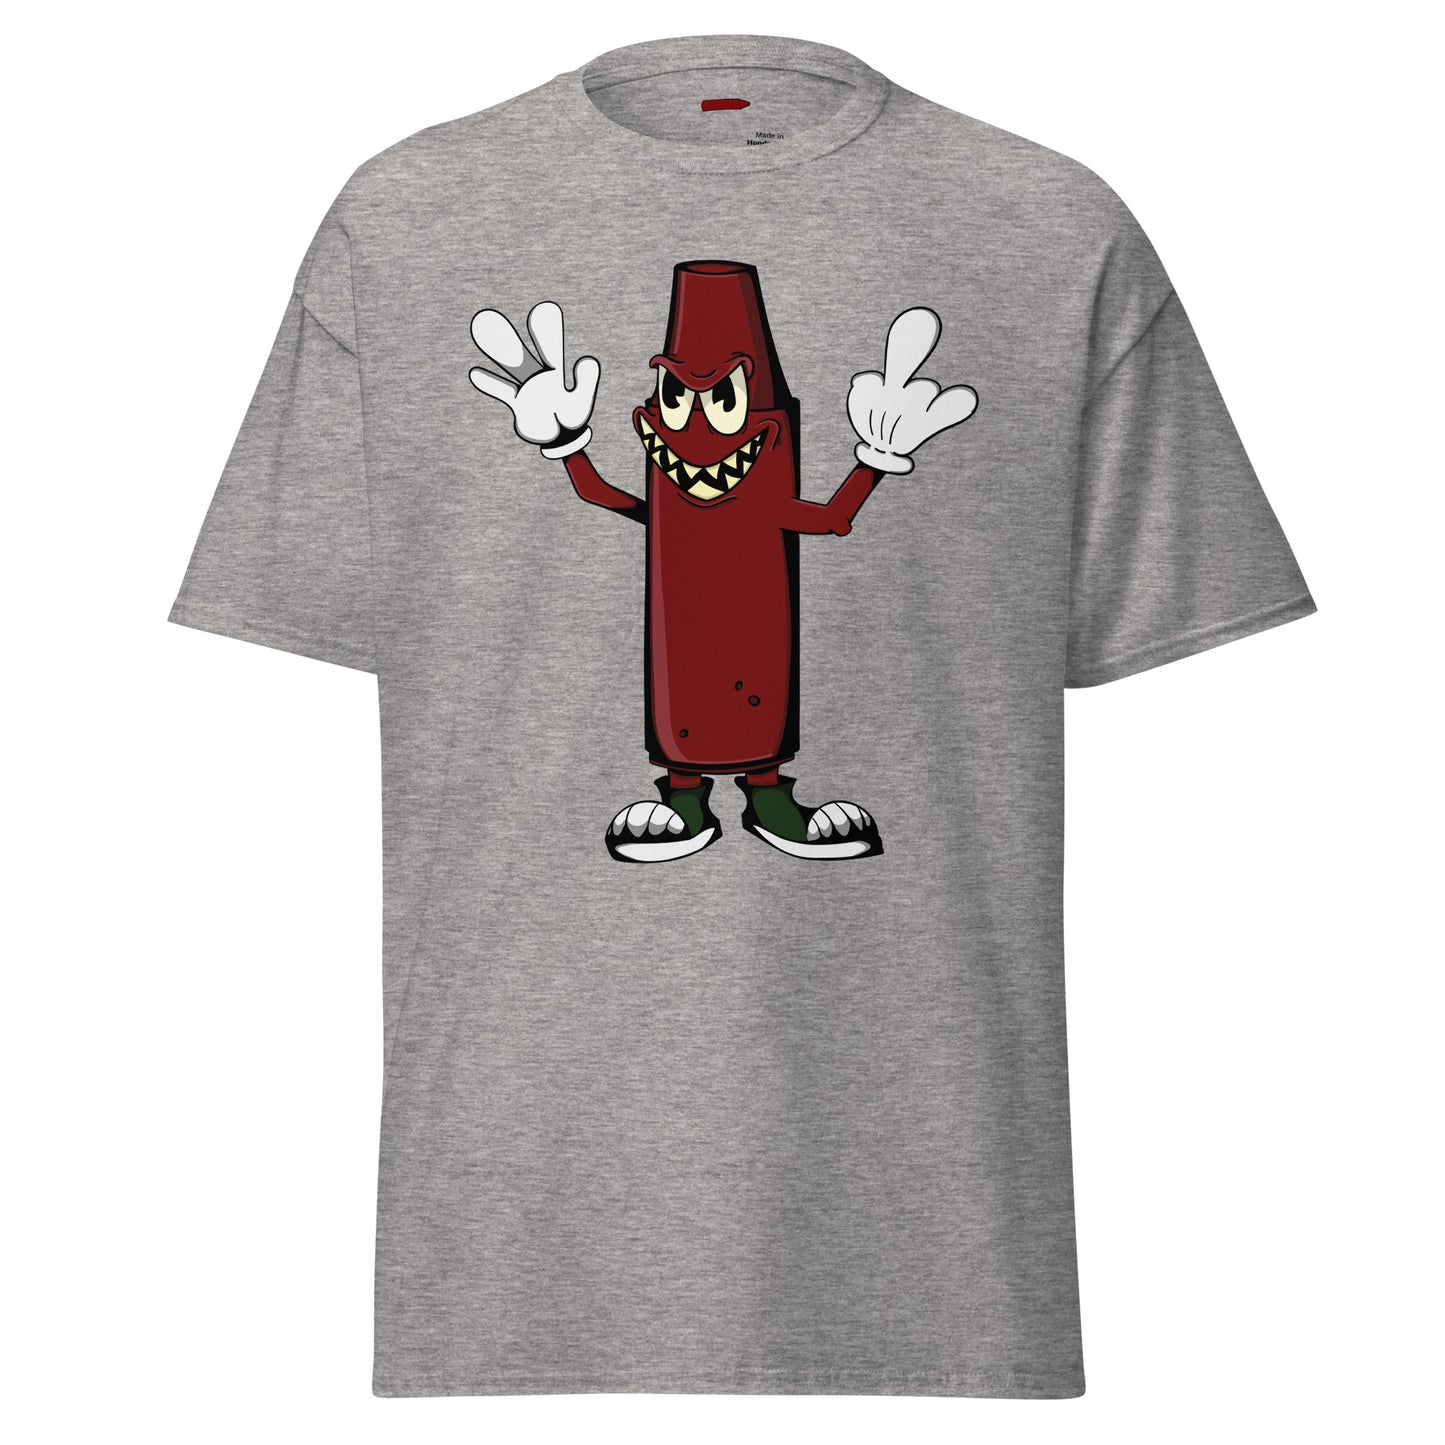 Bloody da crayon - Men's T-Shirt